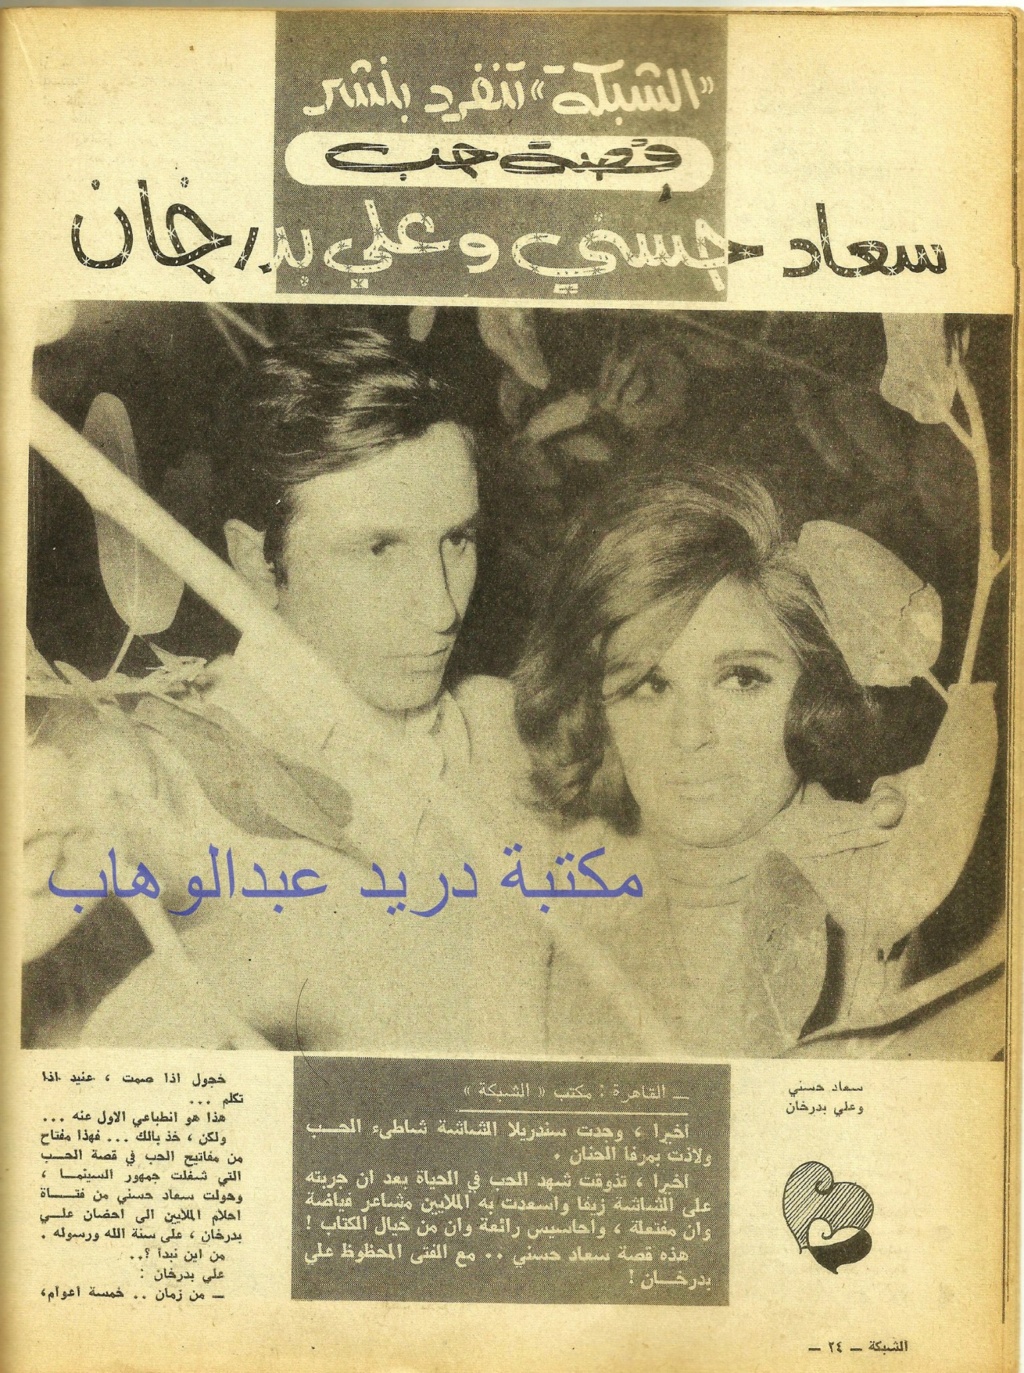 بدرخان - حوار صحفي : قصة حب سعاد حسني وعلي بدرخان 1970 م 1318